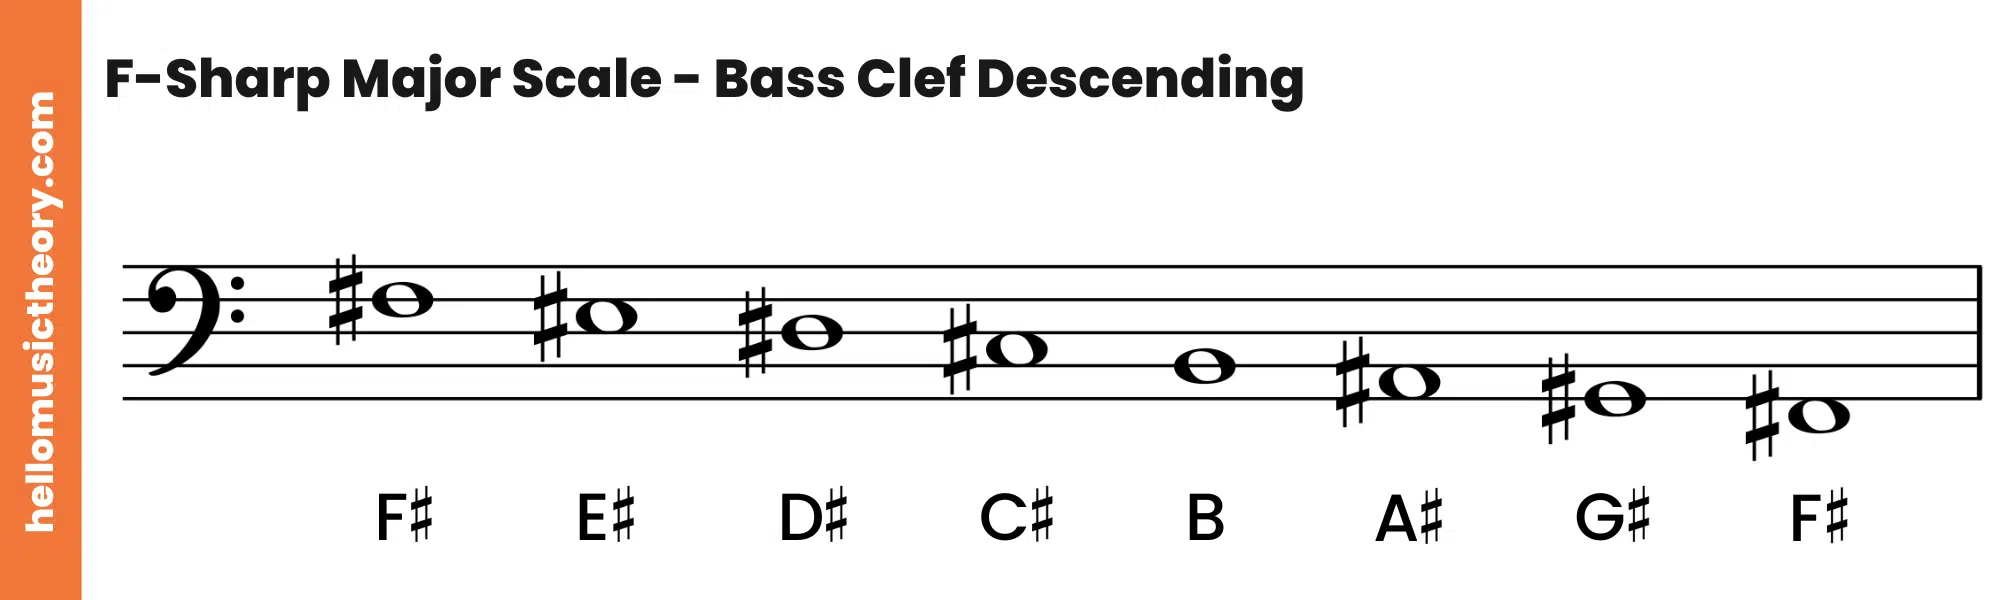 F-Sharp Major Scale Bass Clef Descending